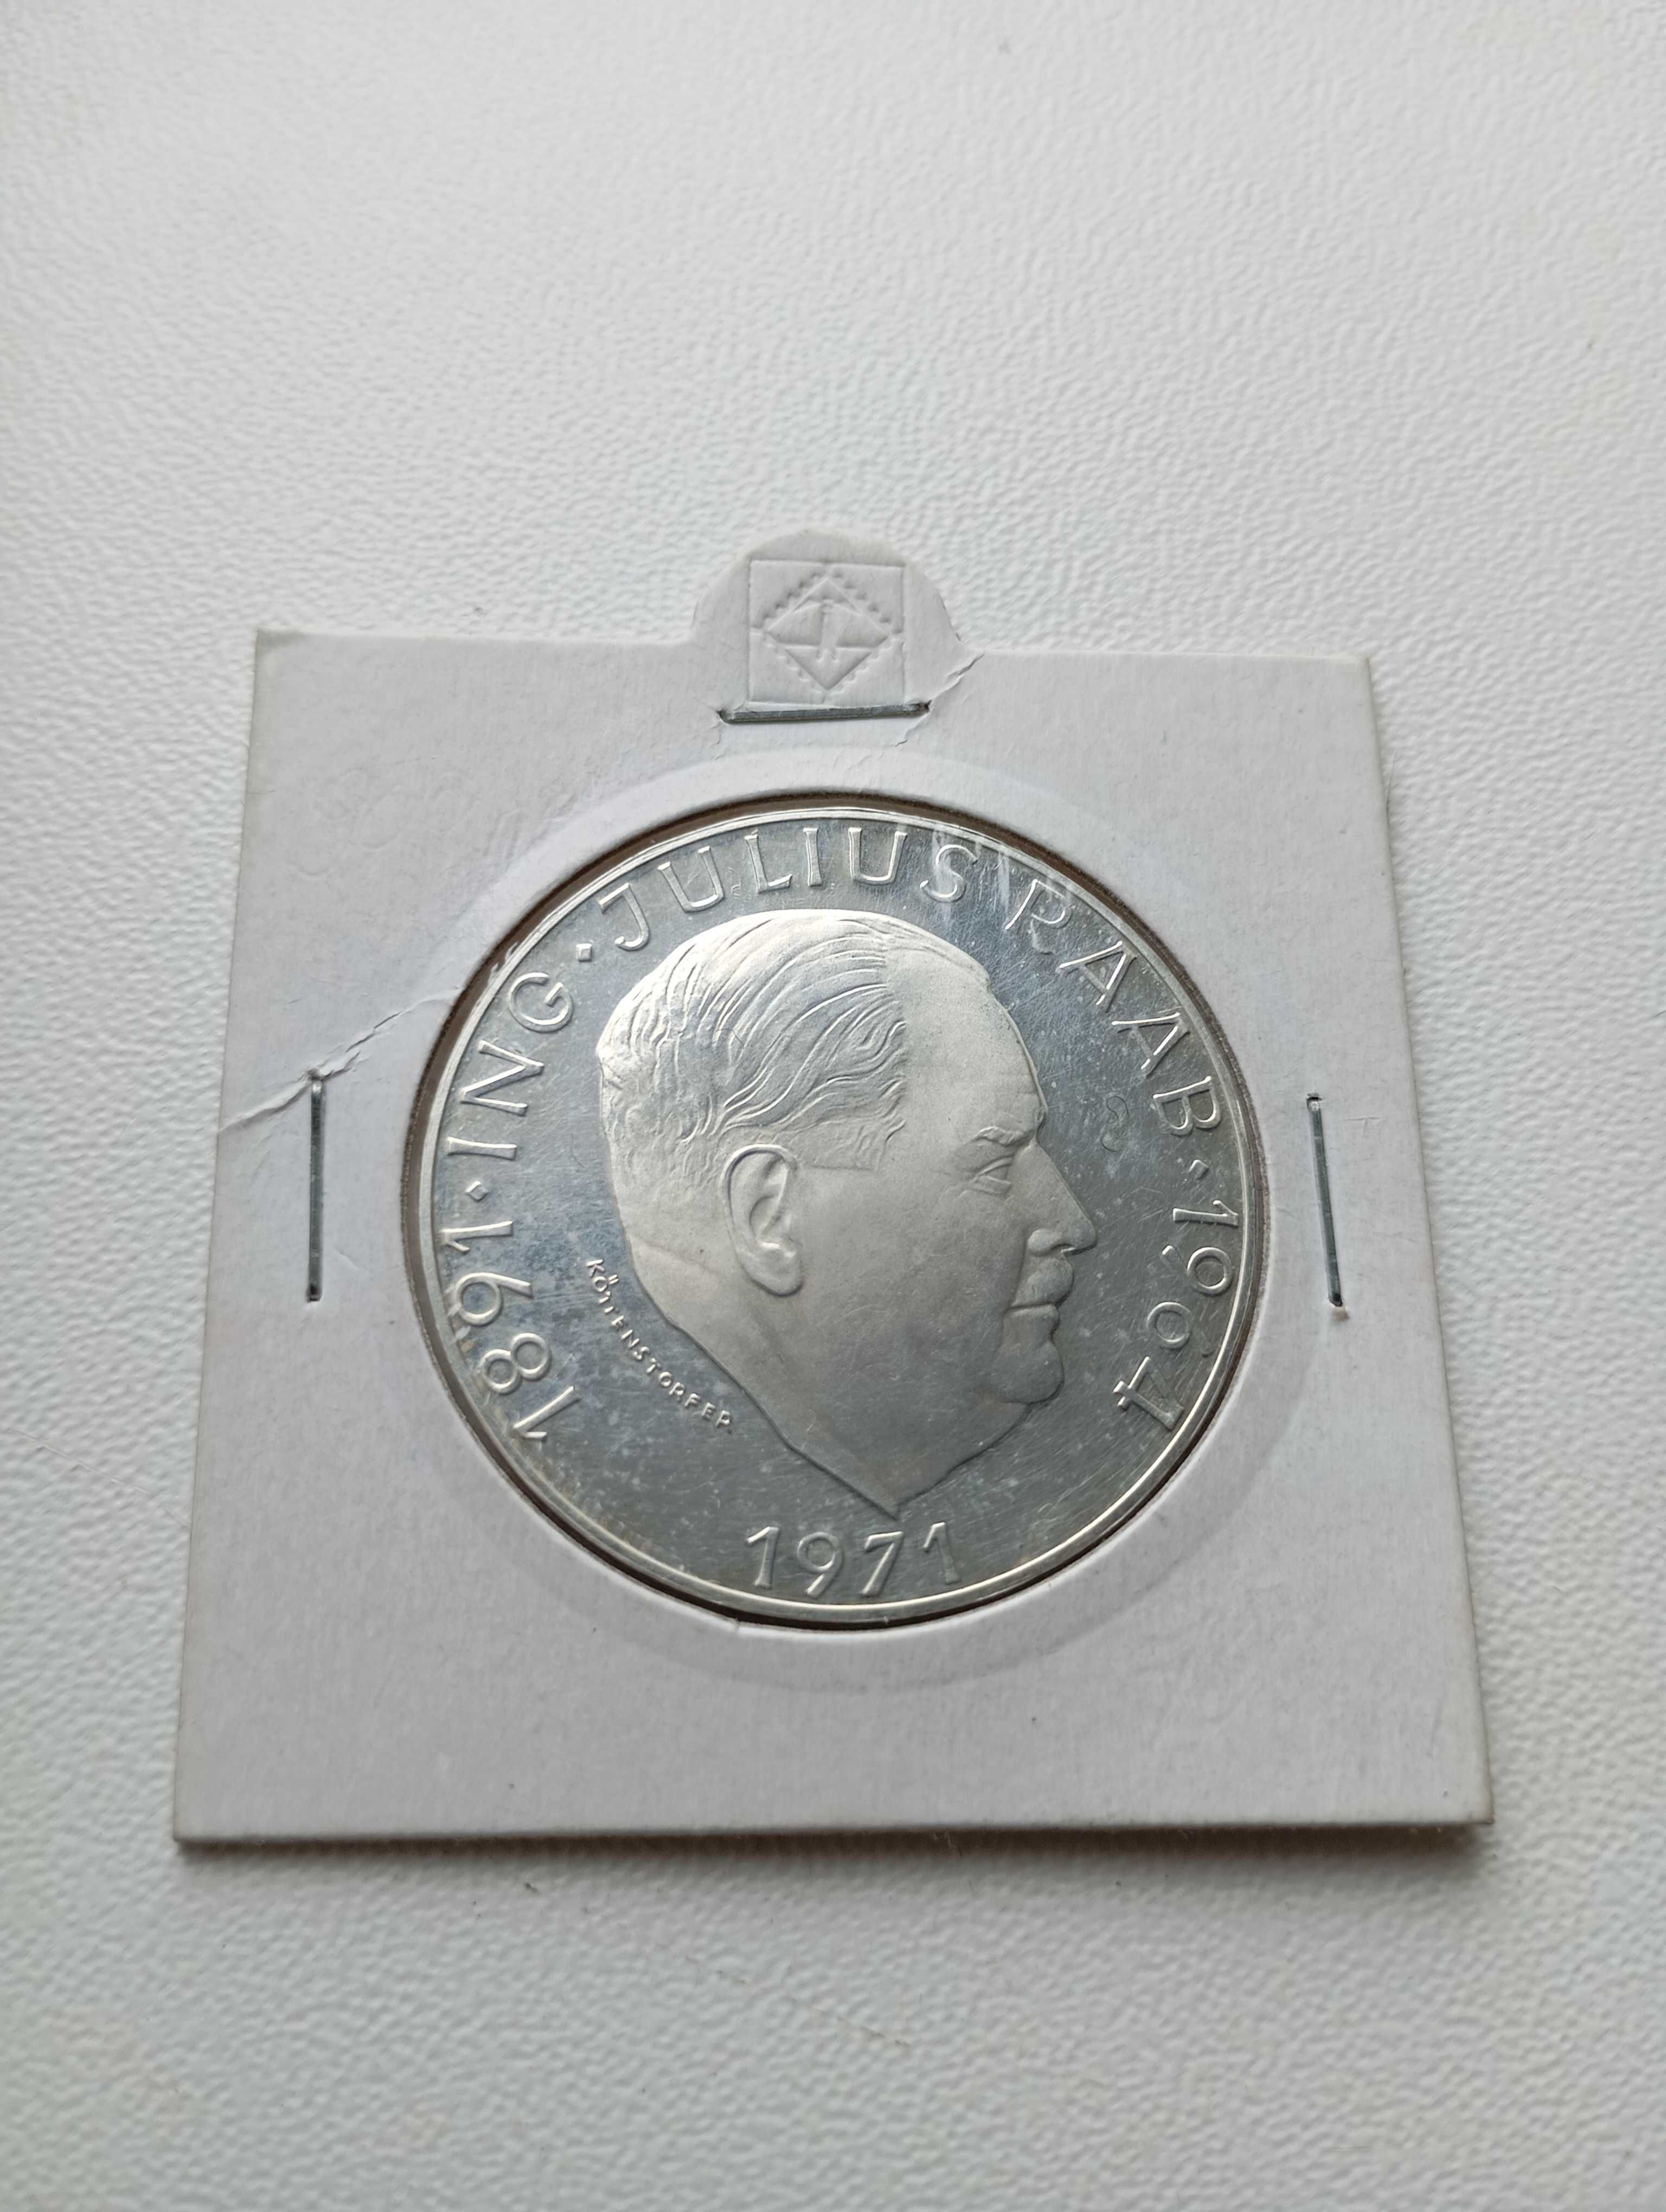 Австрия 50 шиллингов 1971 серебро 900-20г.